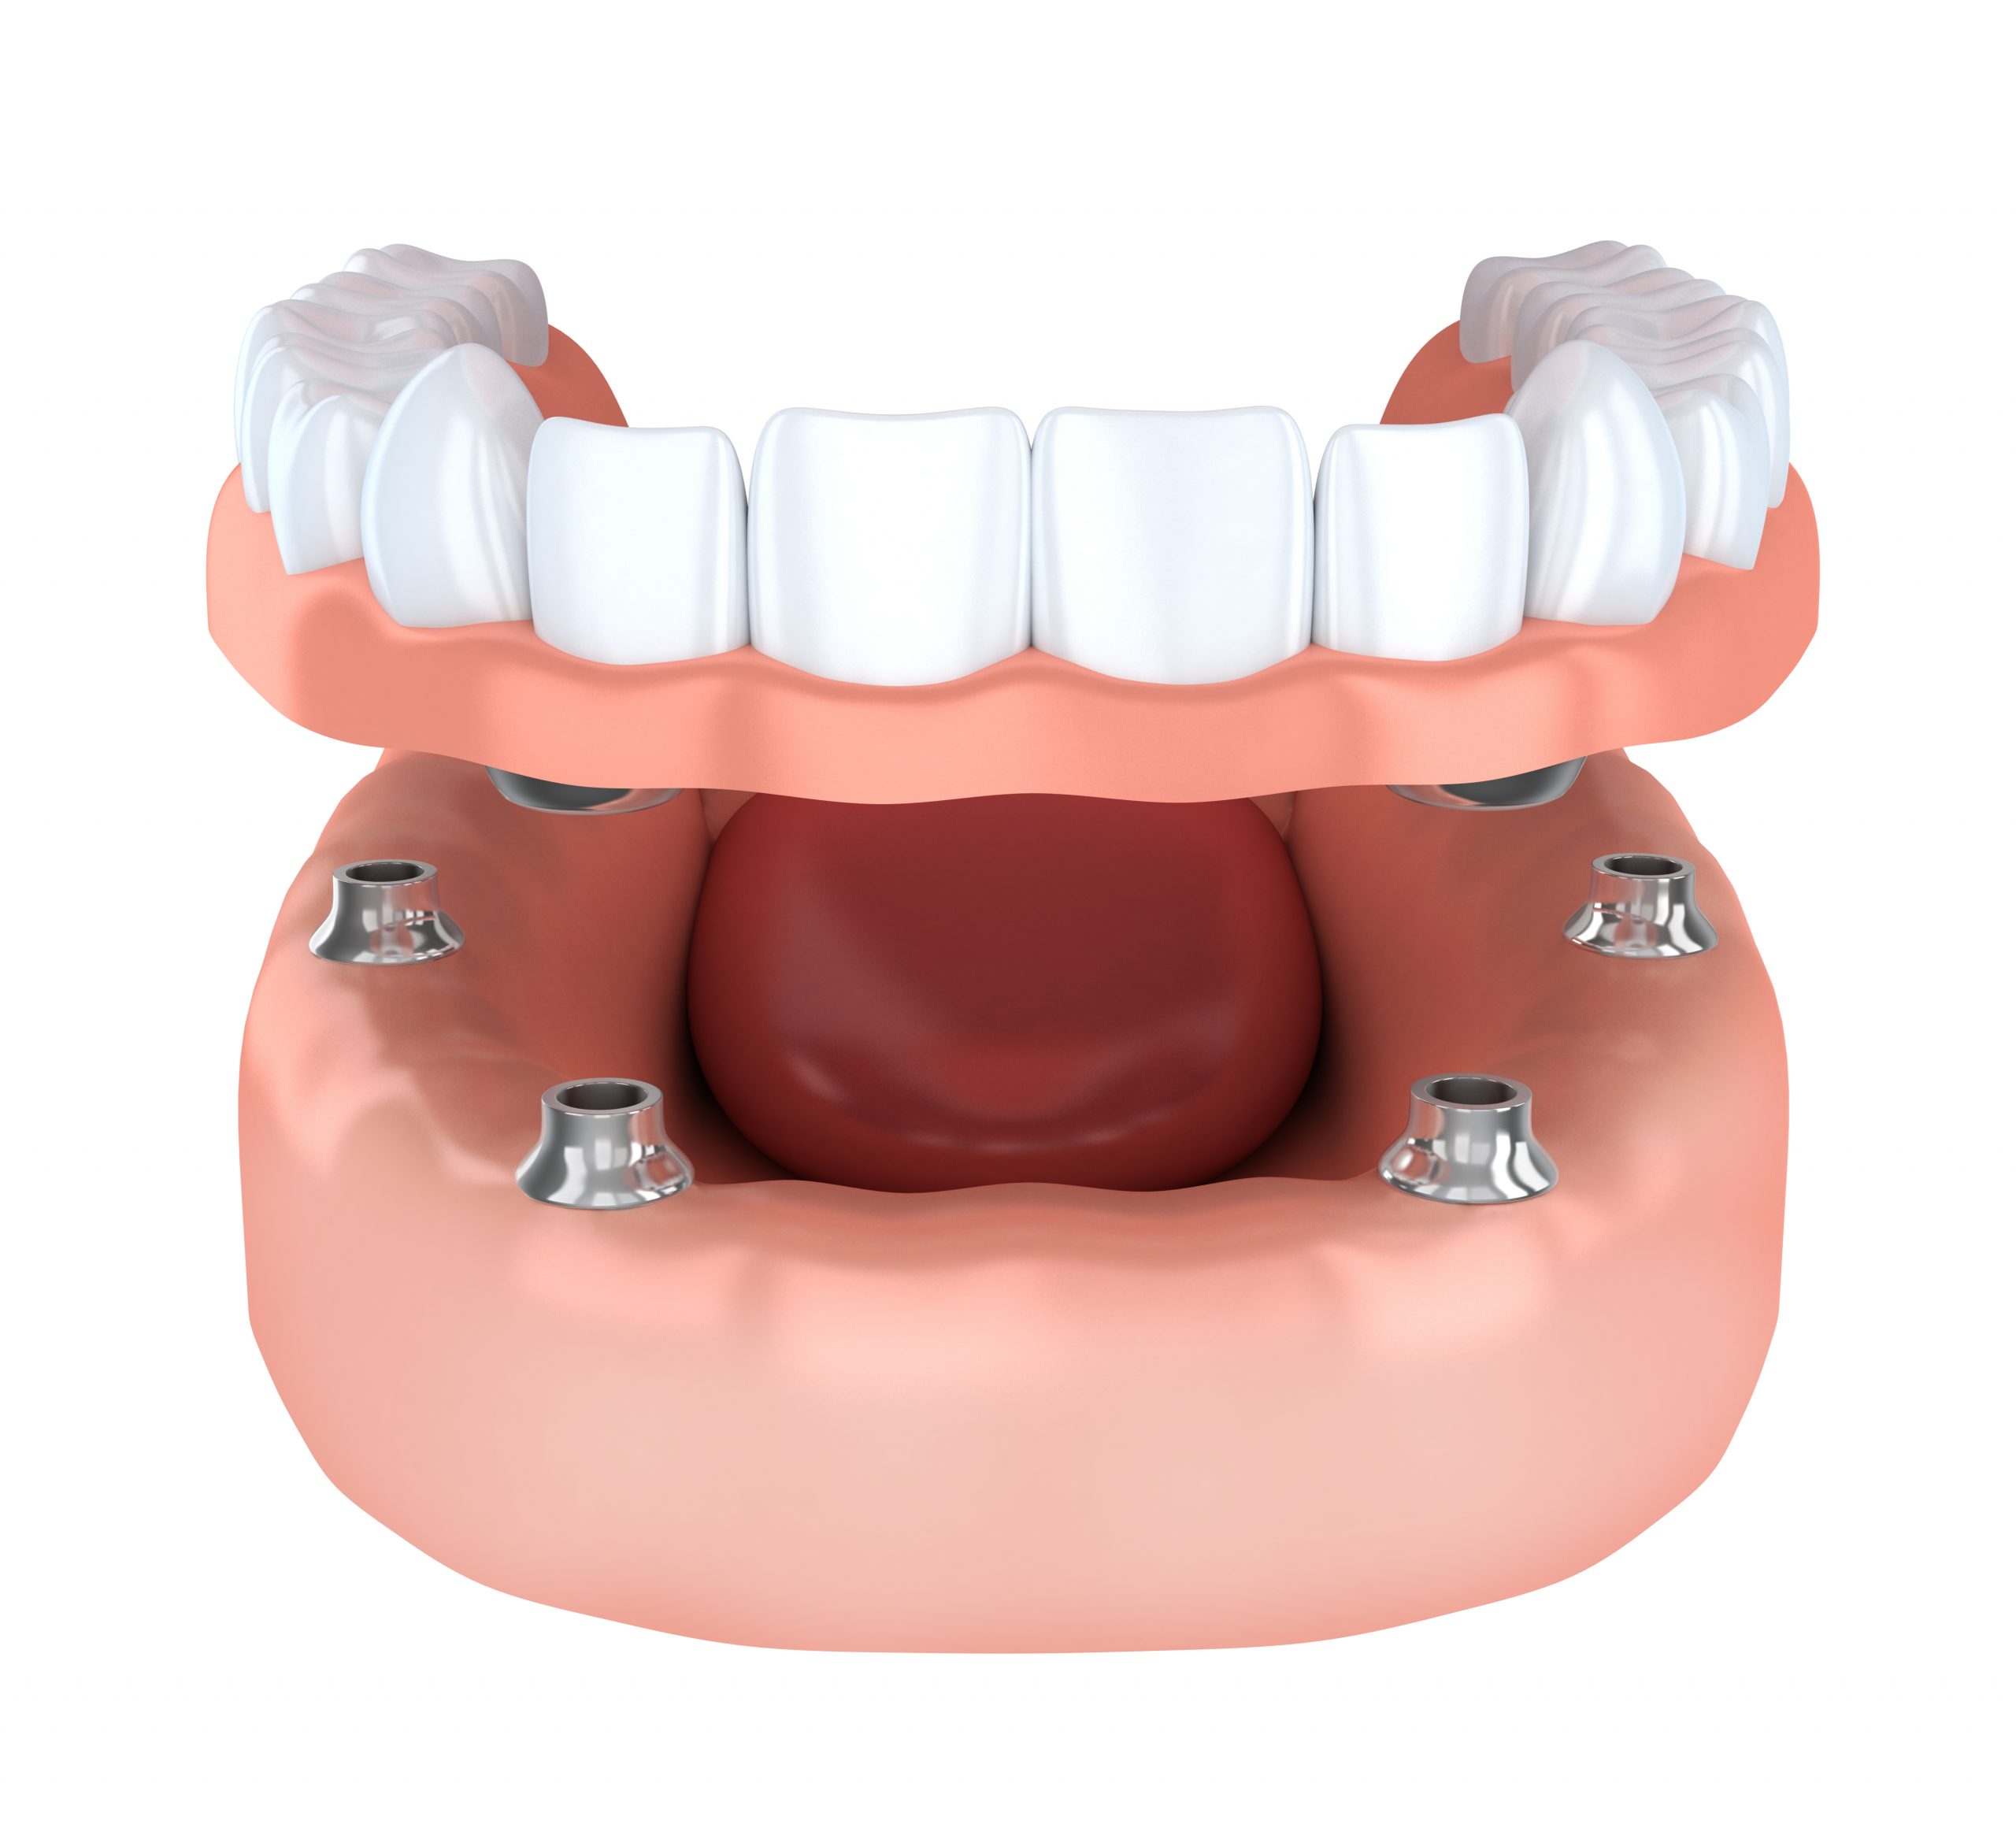 Tooth humman implantation, denture (done in 3d rendering)